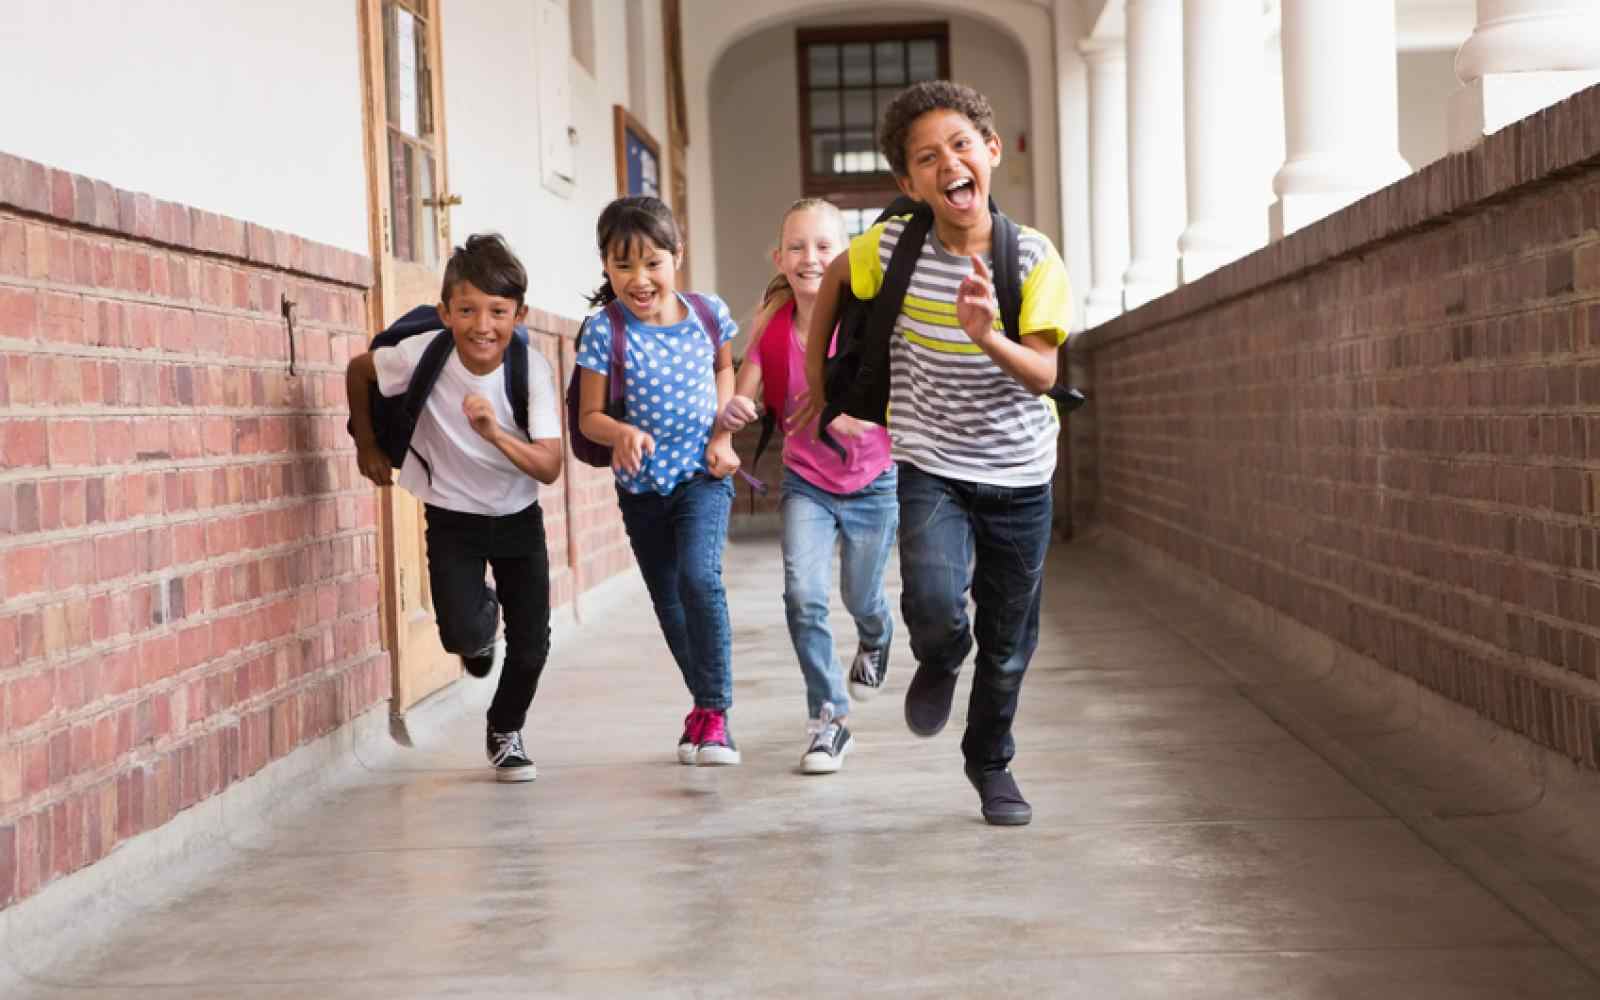 Kids running in hall